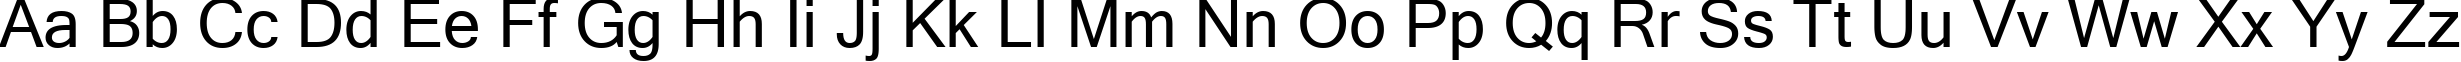 Пример написания английского алфавита шрифтом Microsoft Sans Serif